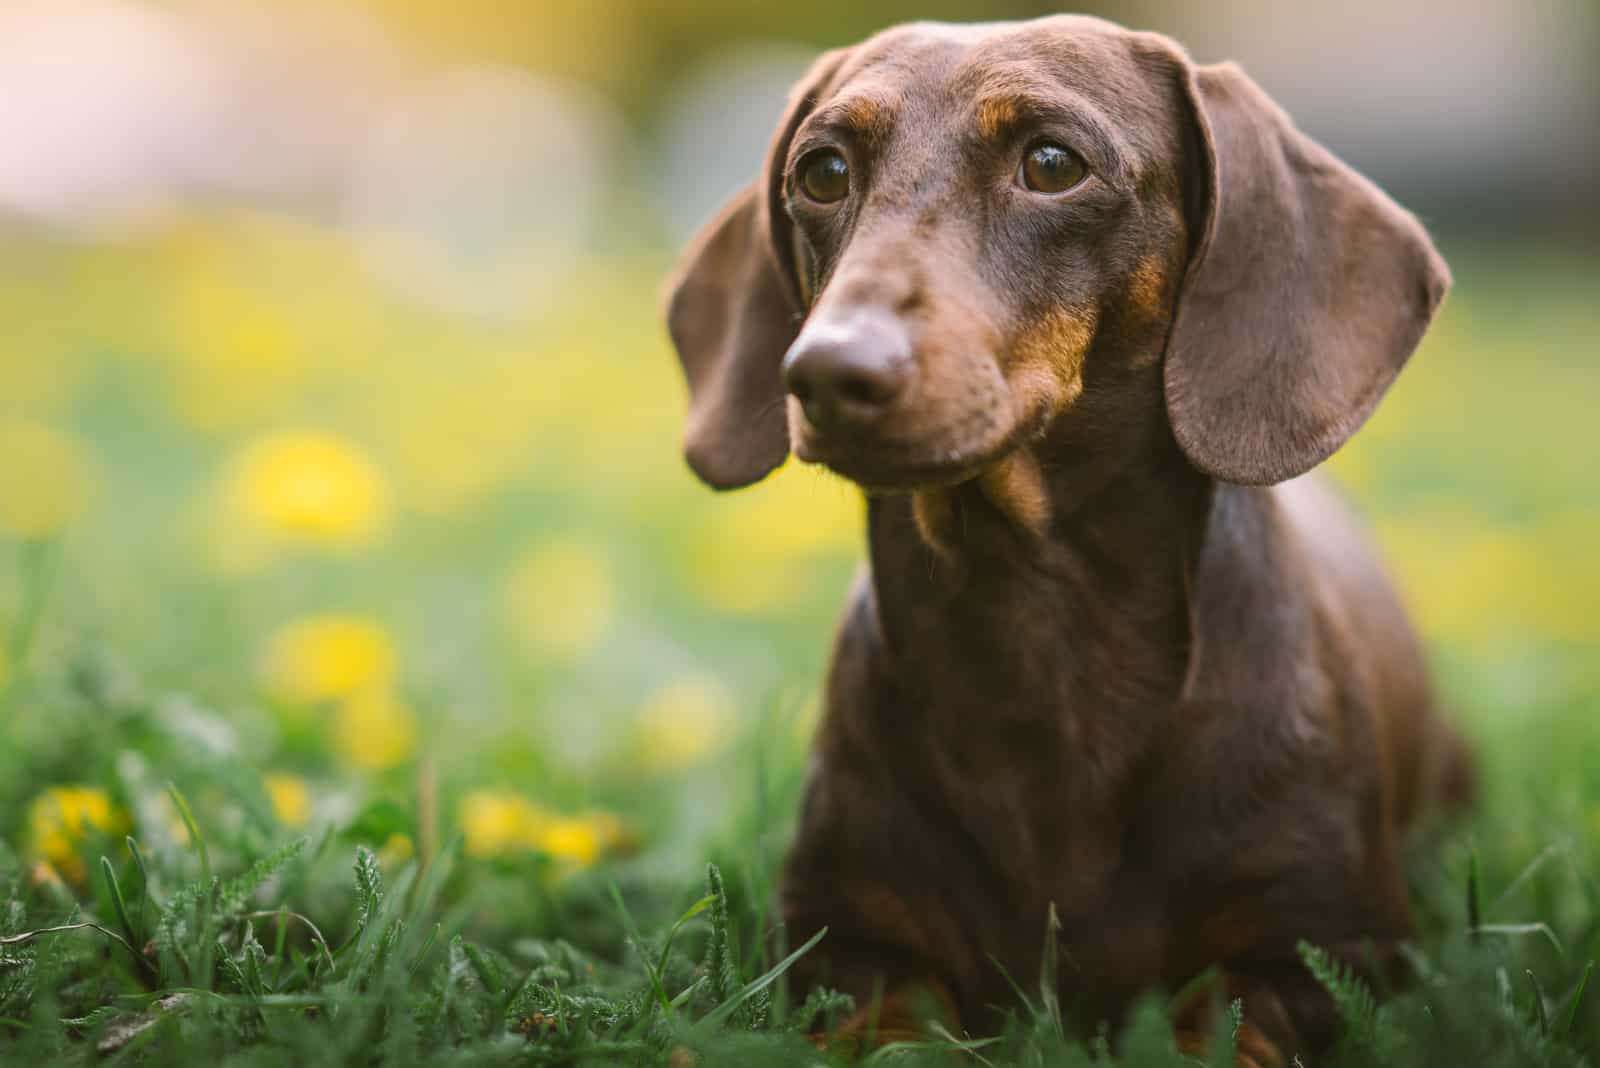 dachshund dog lying in the grass